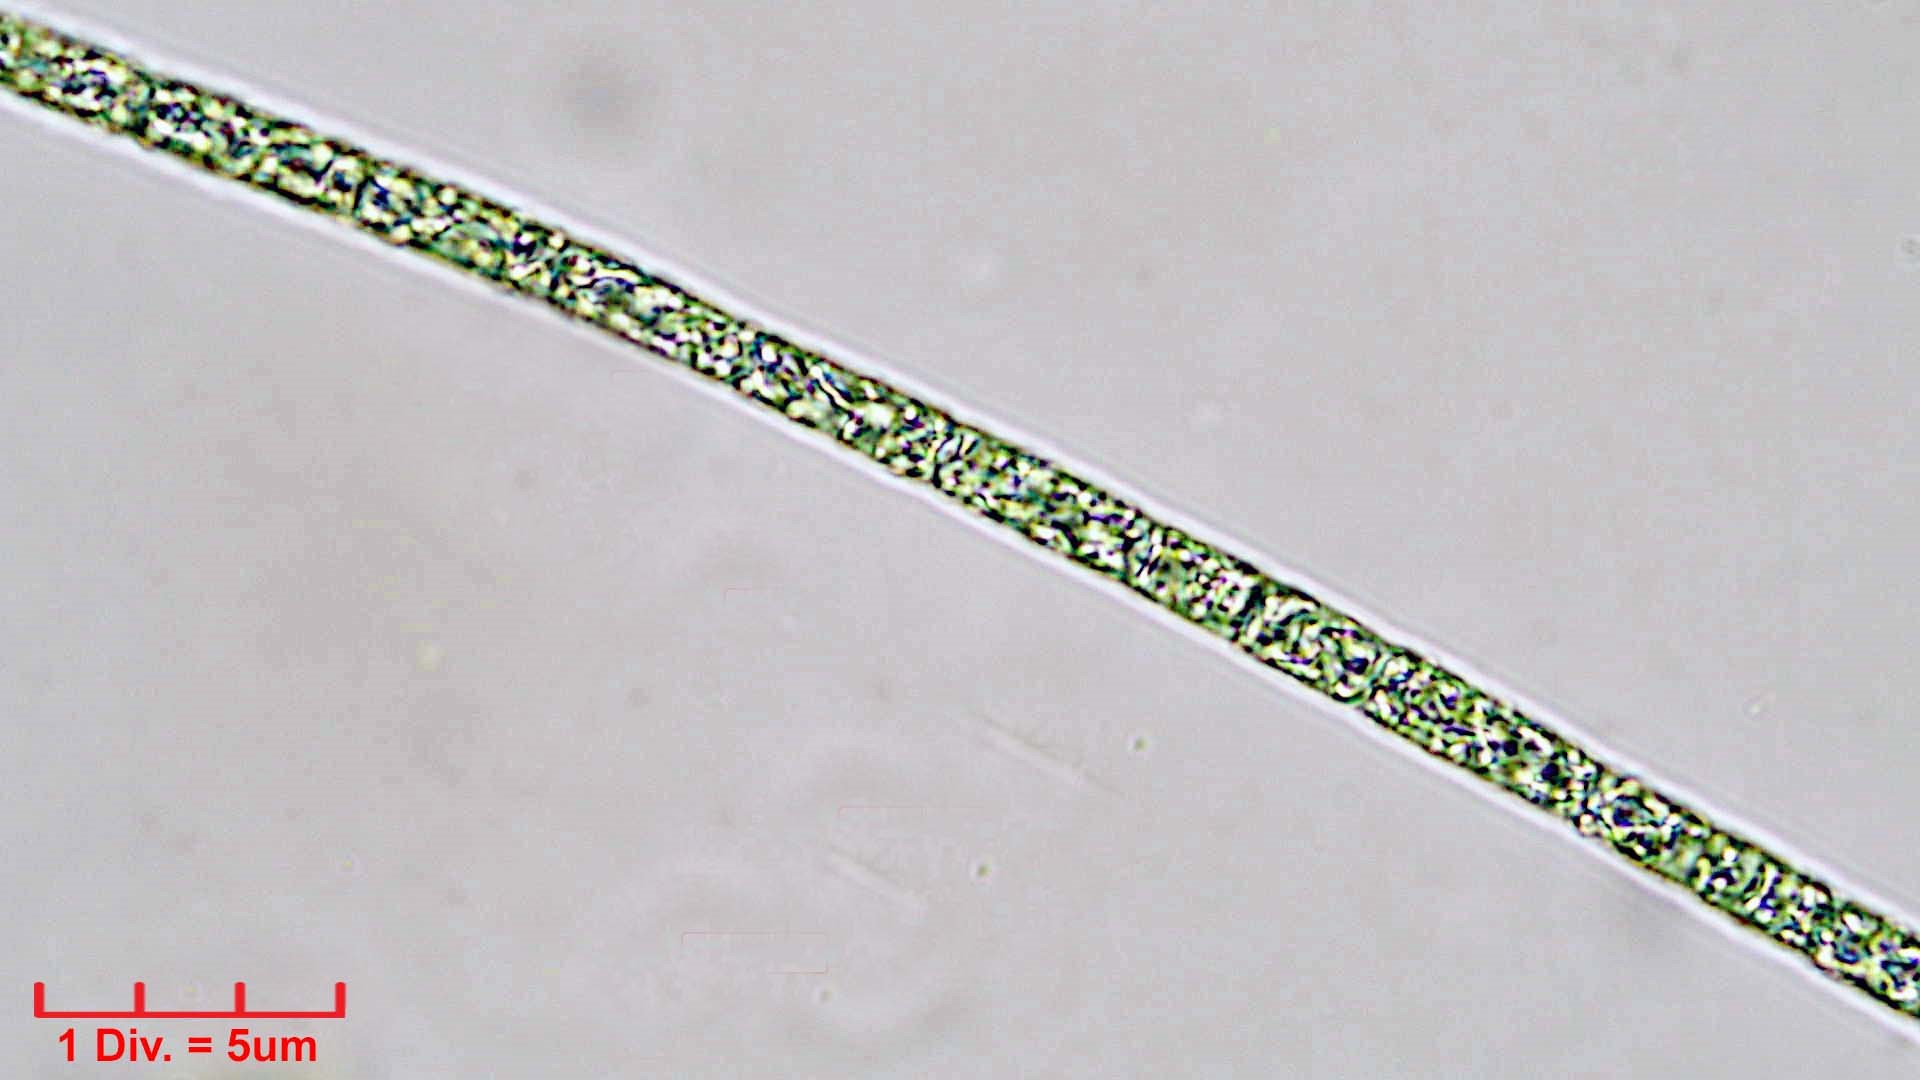 ././././Cyanobacteria/Nostocales/Aphanizomenonaceae/Raphidiopsis/sp/raphidiopsis-550.jpg